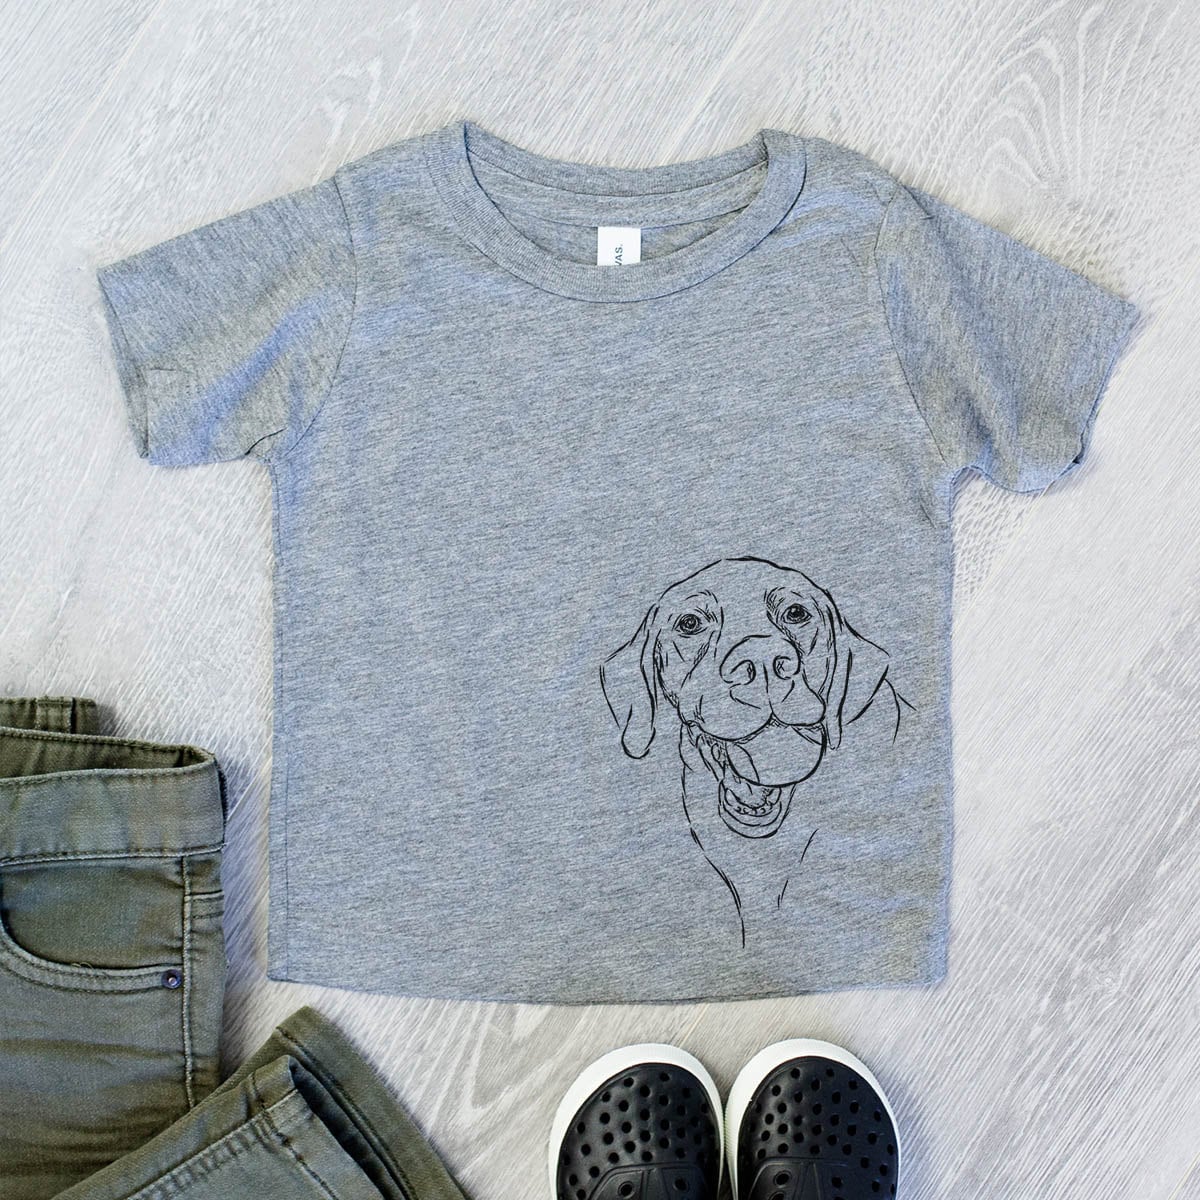 Bailey The Labrador Retriever Tri-Blend Shirt - Kids Dog Tshirt Animal Glasses T Children Girl Boy Unisex Clothing